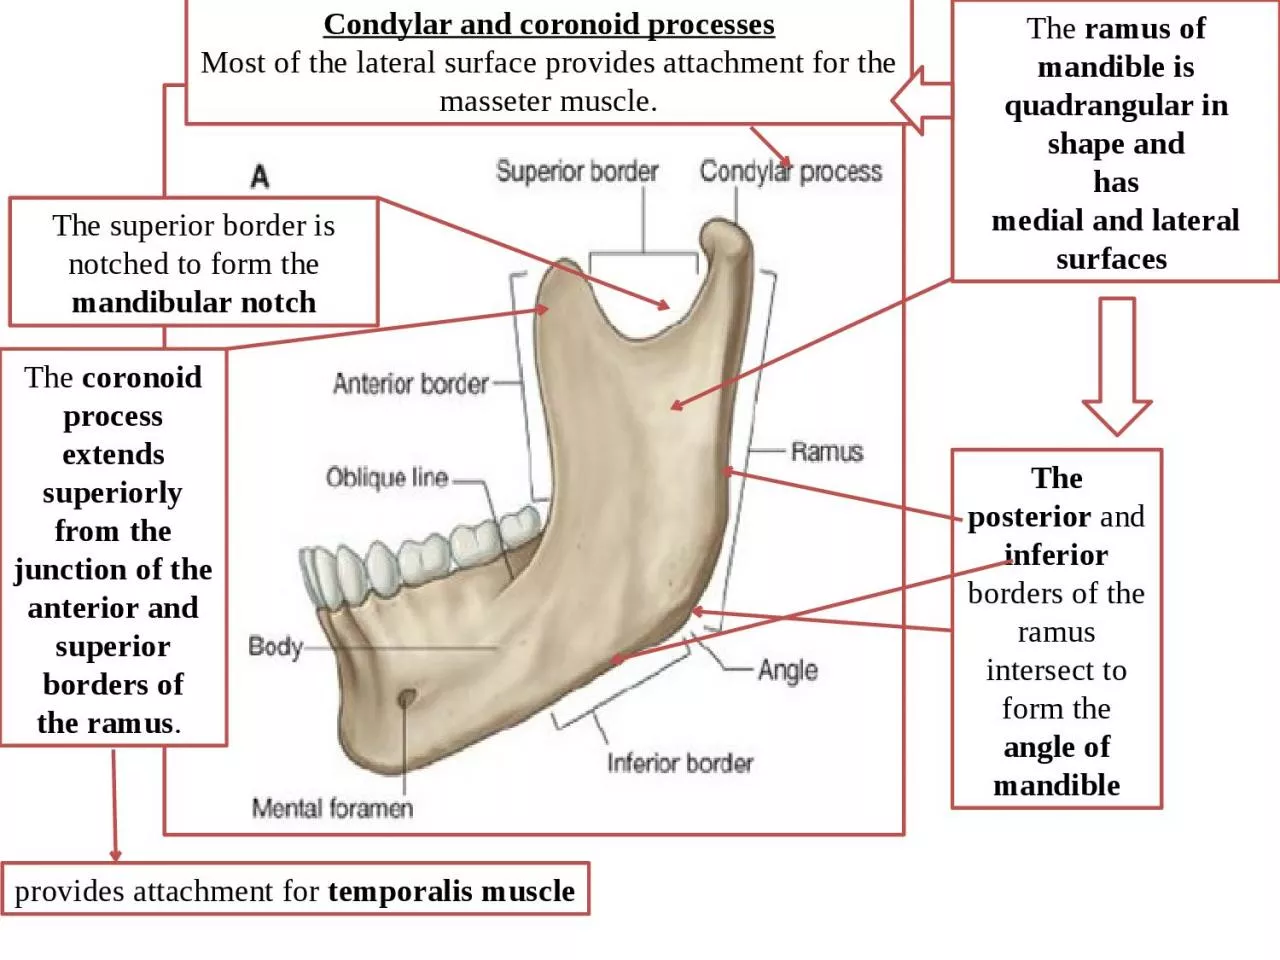 The  ramus of mandible is quadrangular in shape and